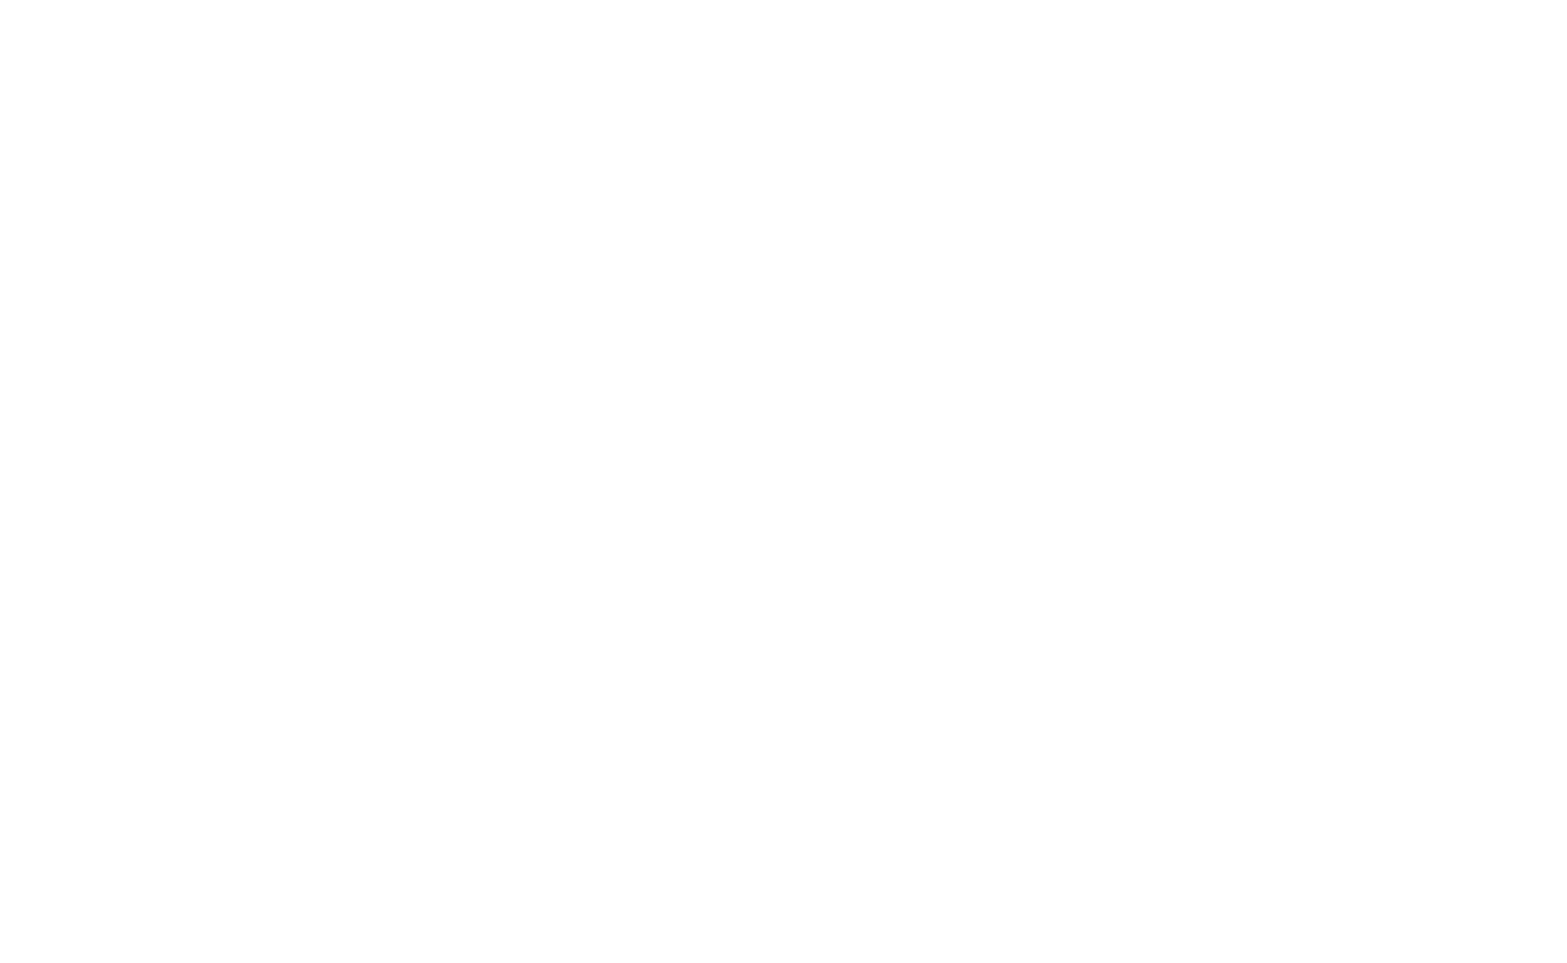 The Goldmark